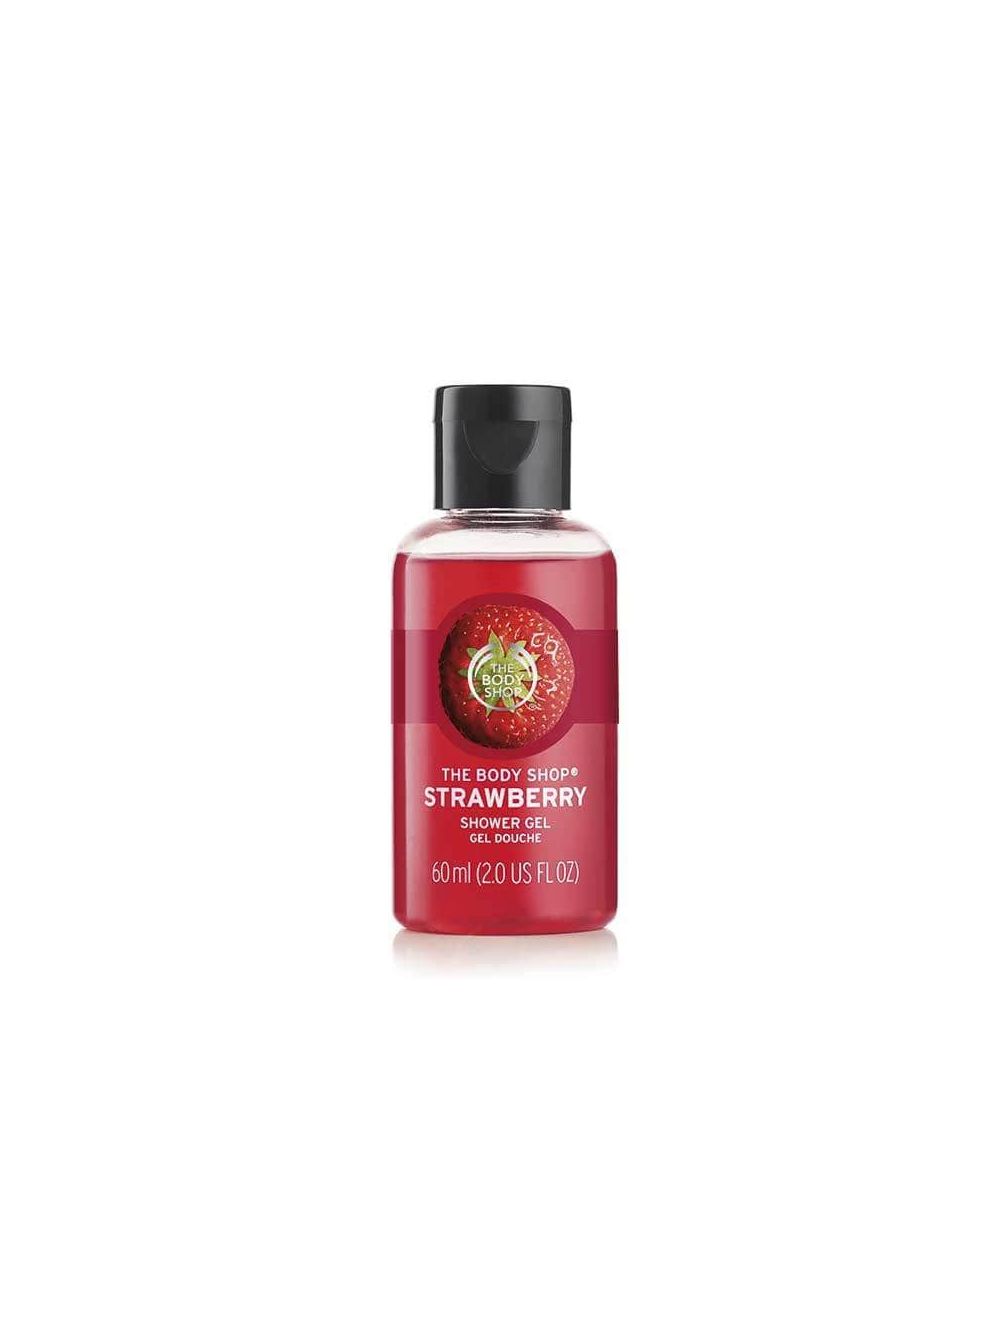 The Body Shop Strawberry Shower Gel (60ml)